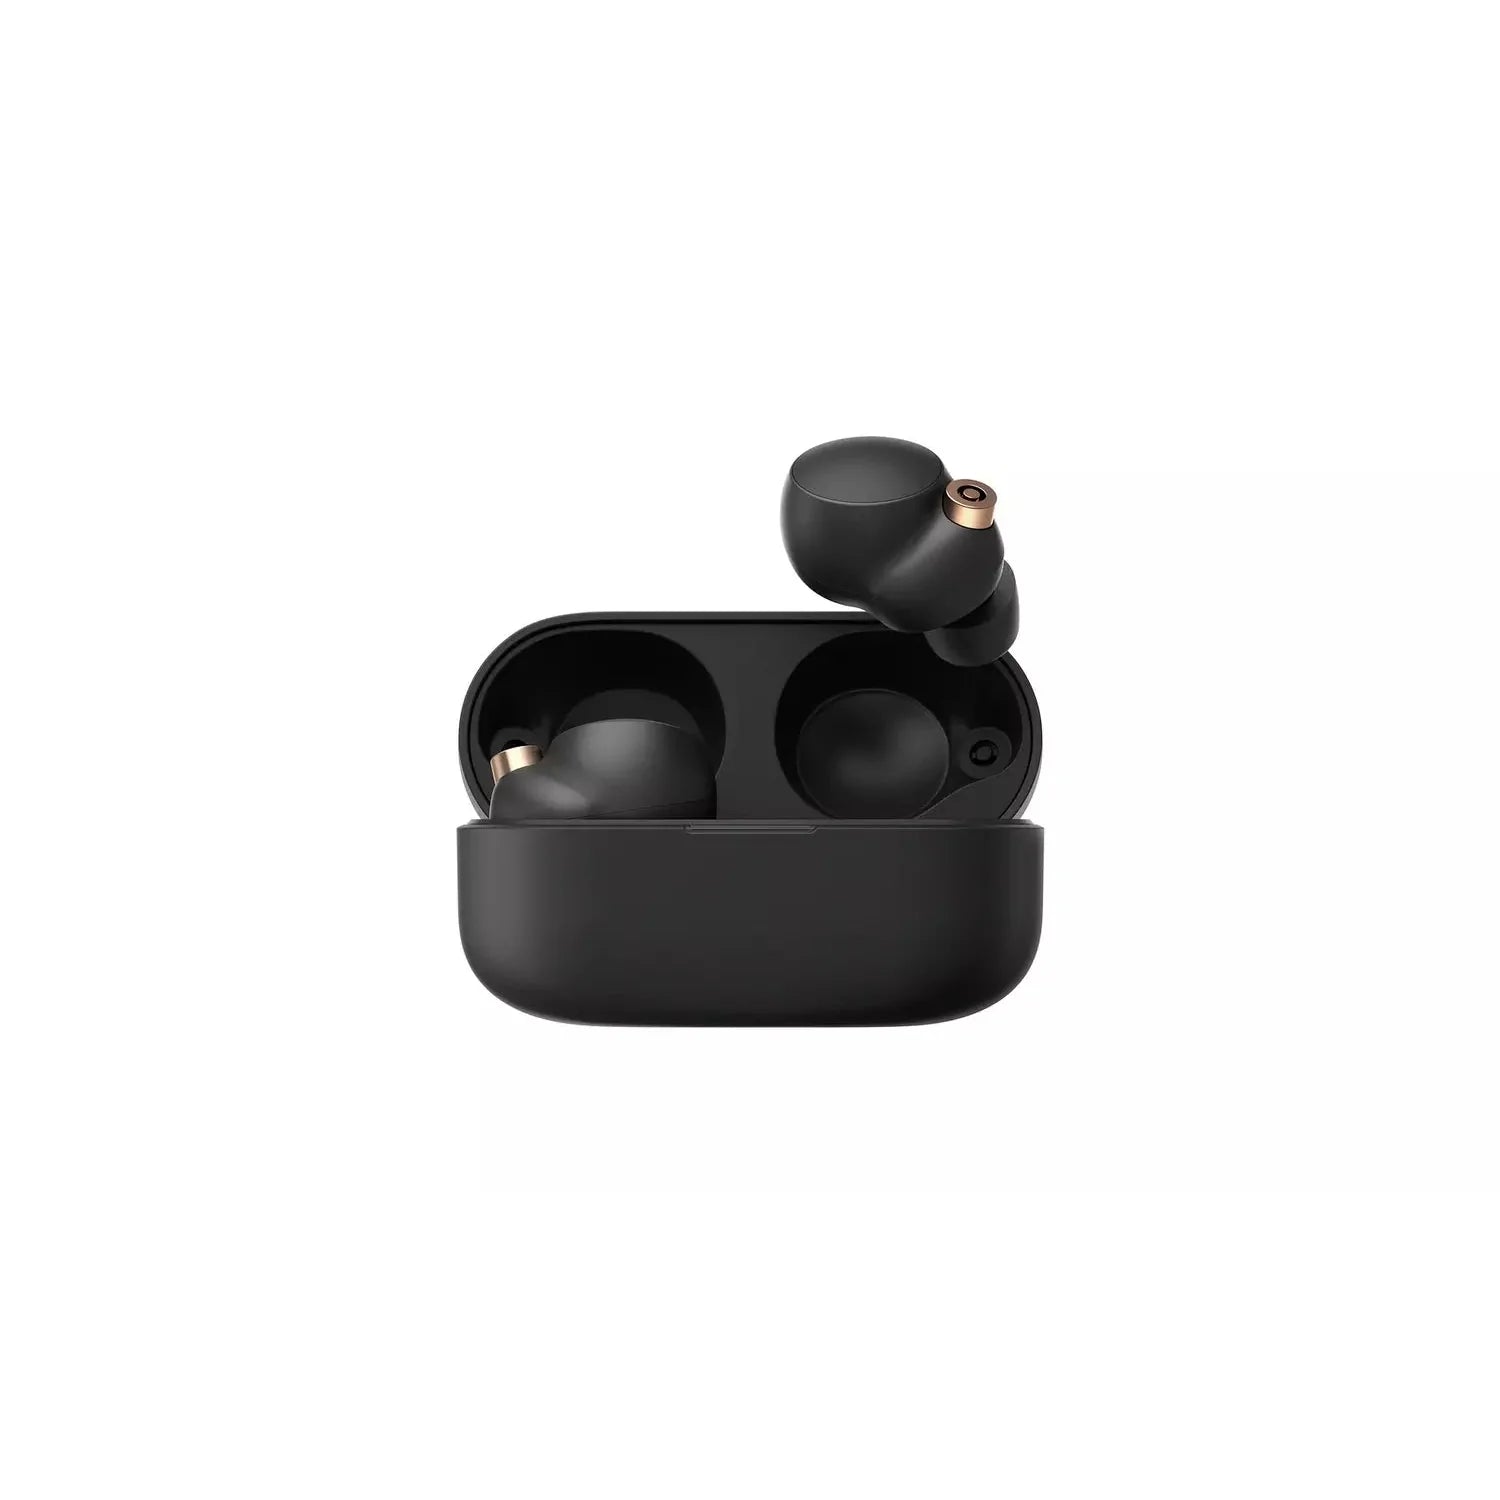 Sony WF-1000XM4 True Wireless Headphones - Black - Refurbished Excellent